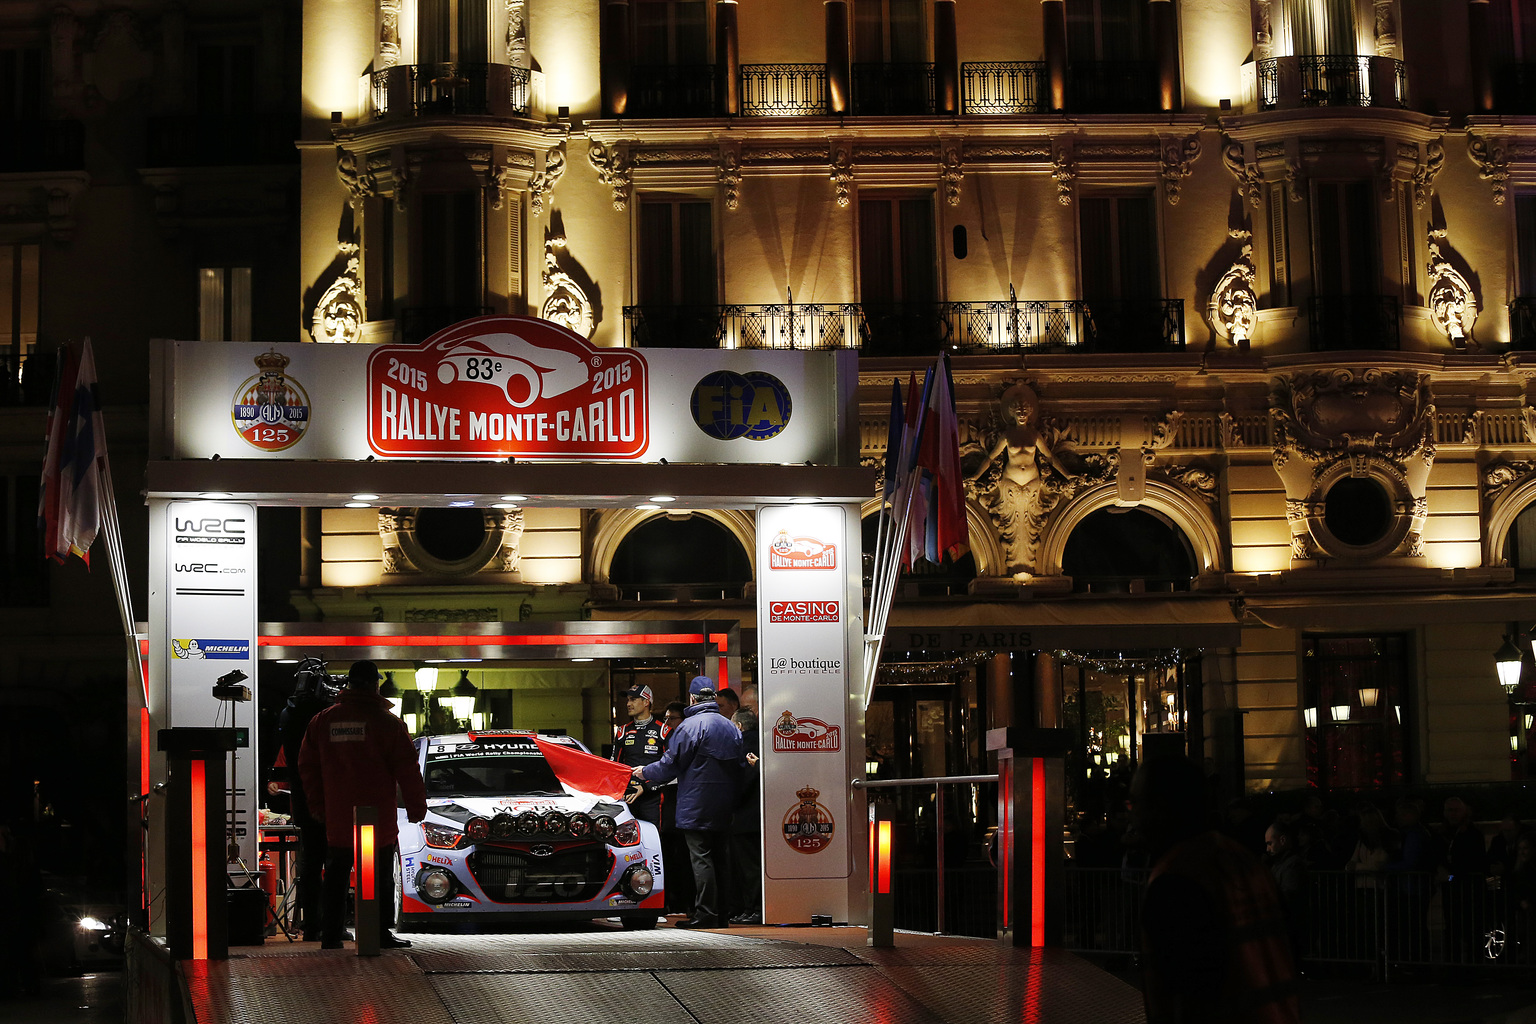 83e Rallye Automobile Monte-Carlo 2015